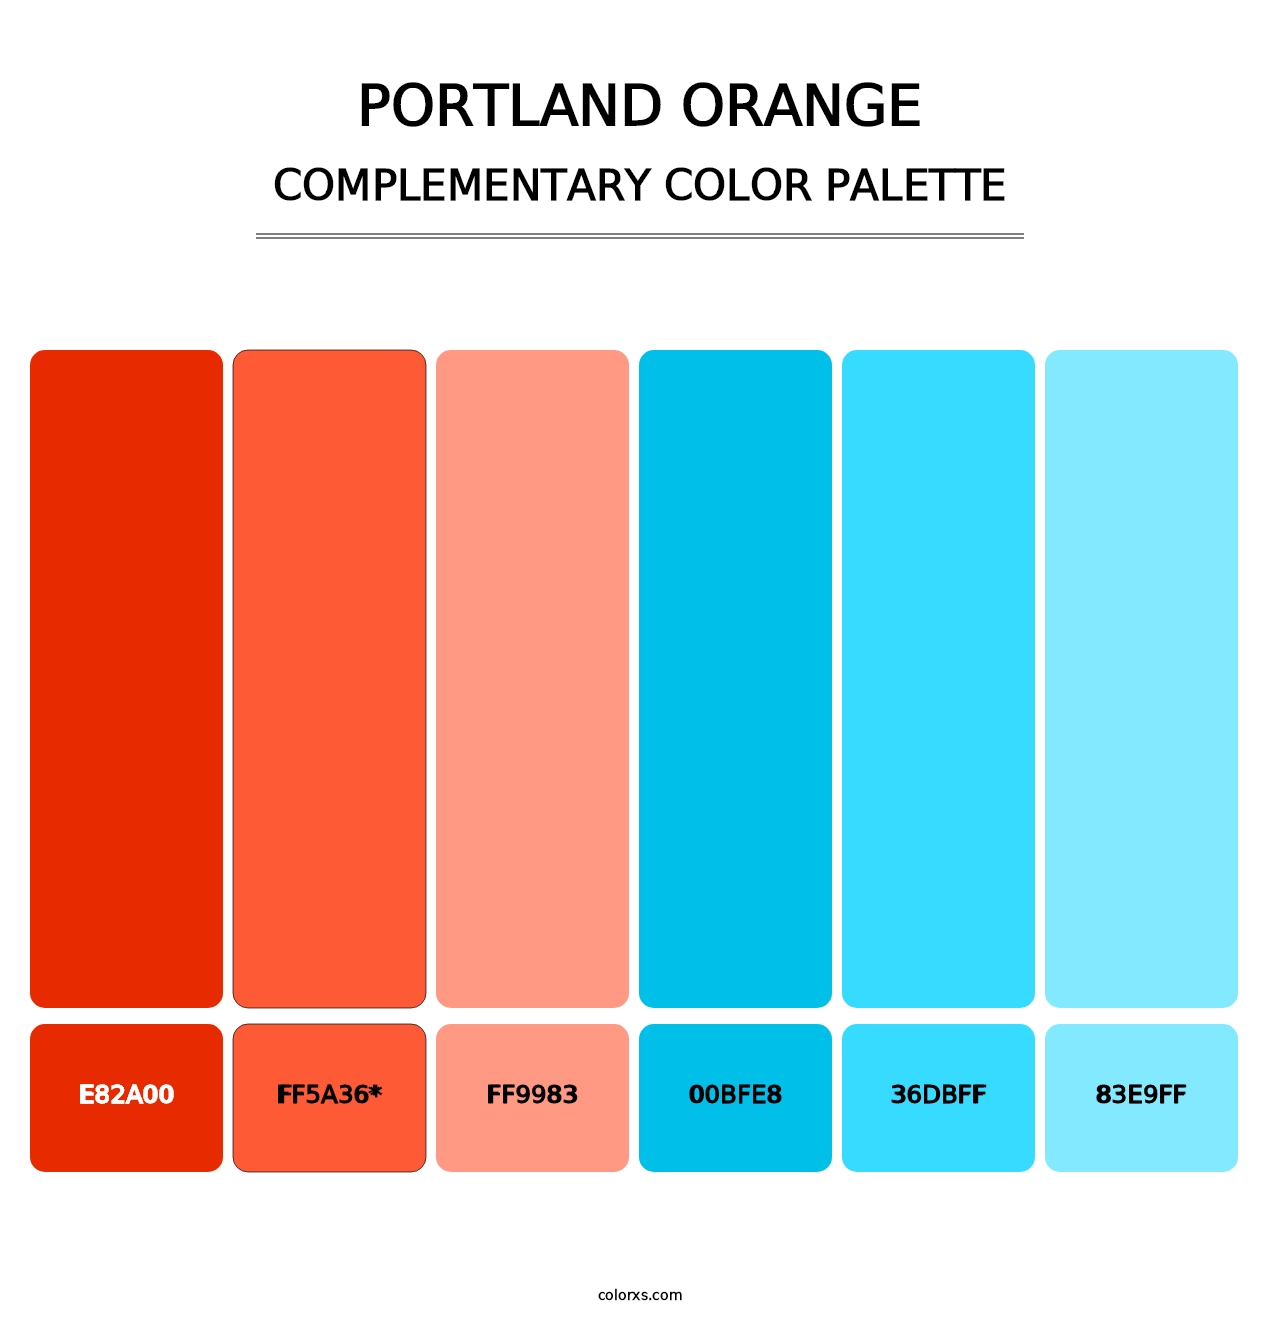 Portland Orange - Complementary Color Palette